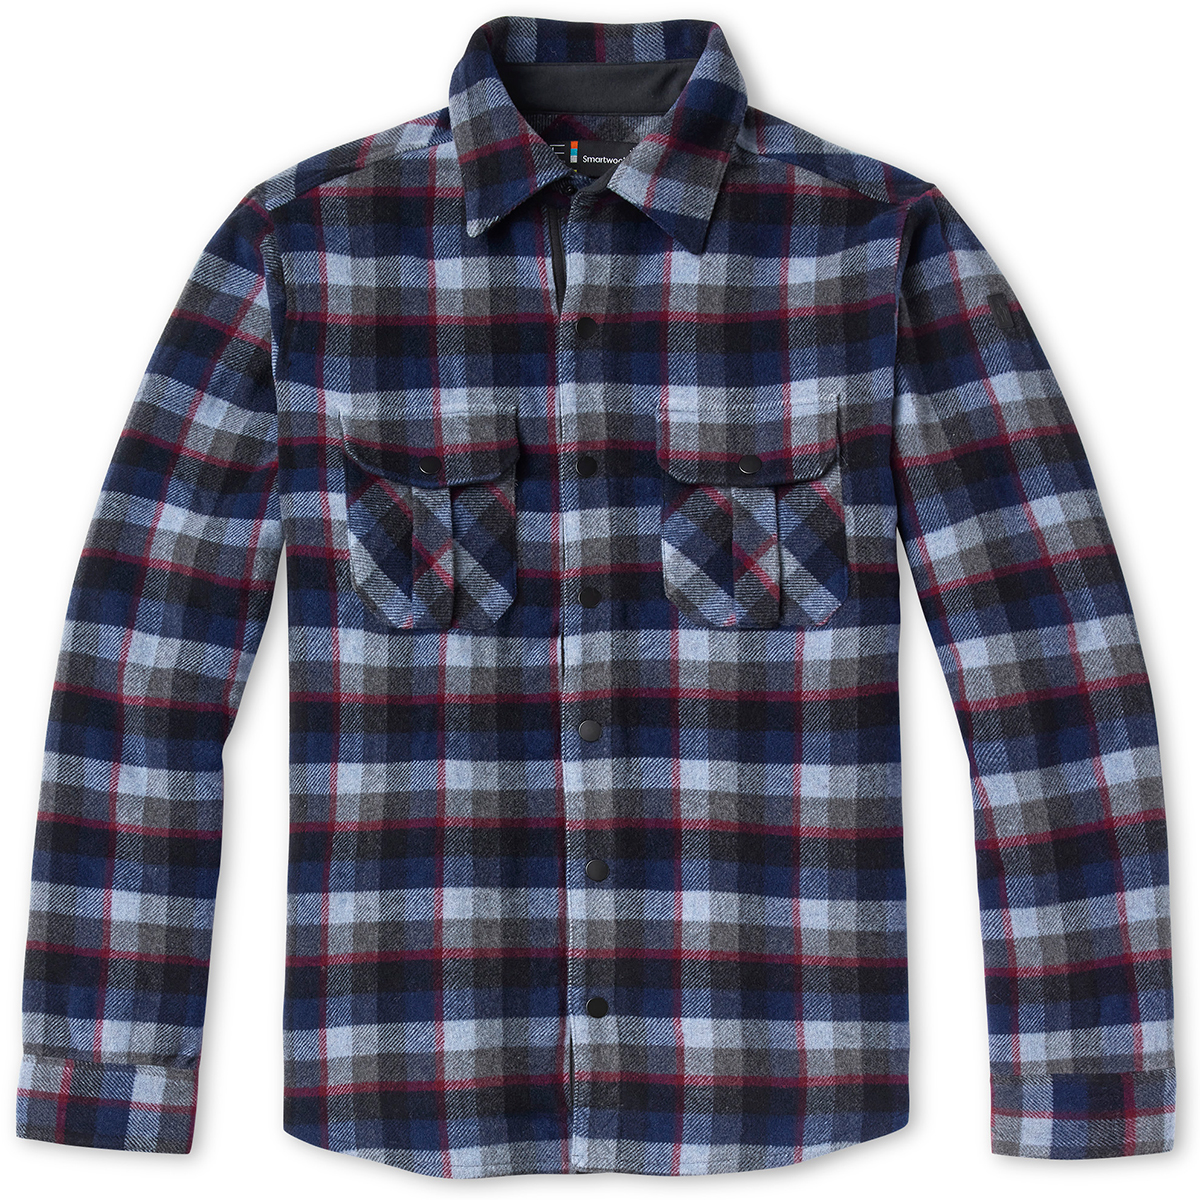 Smartwool Men's Anchor Line Shirt Jacket - Size XL